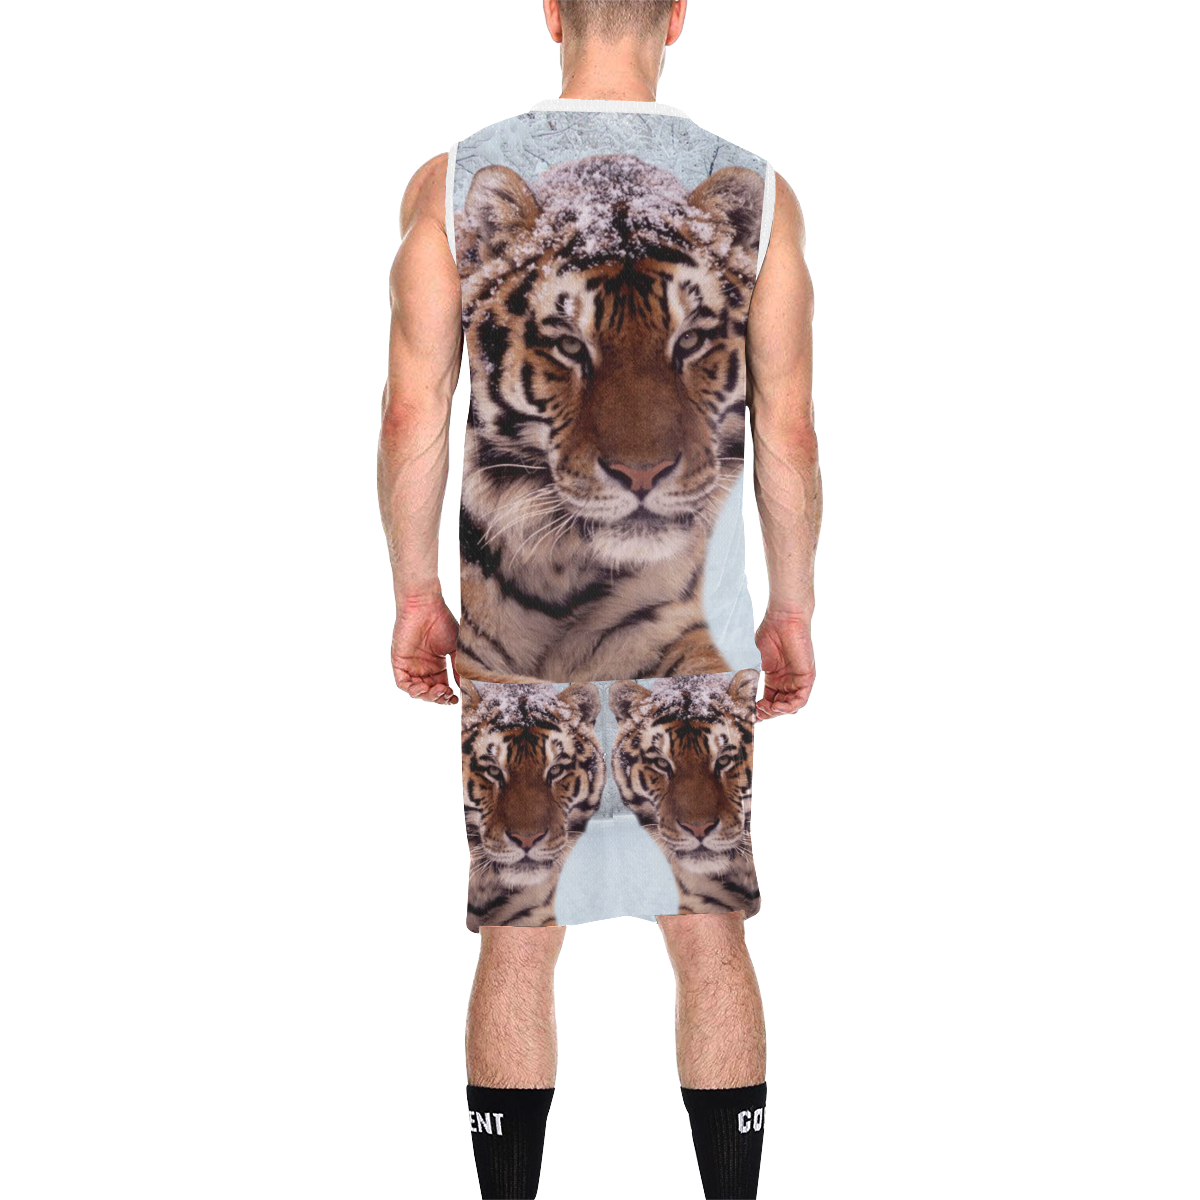 Tiger and Snow All Over Print Basketball Uniform